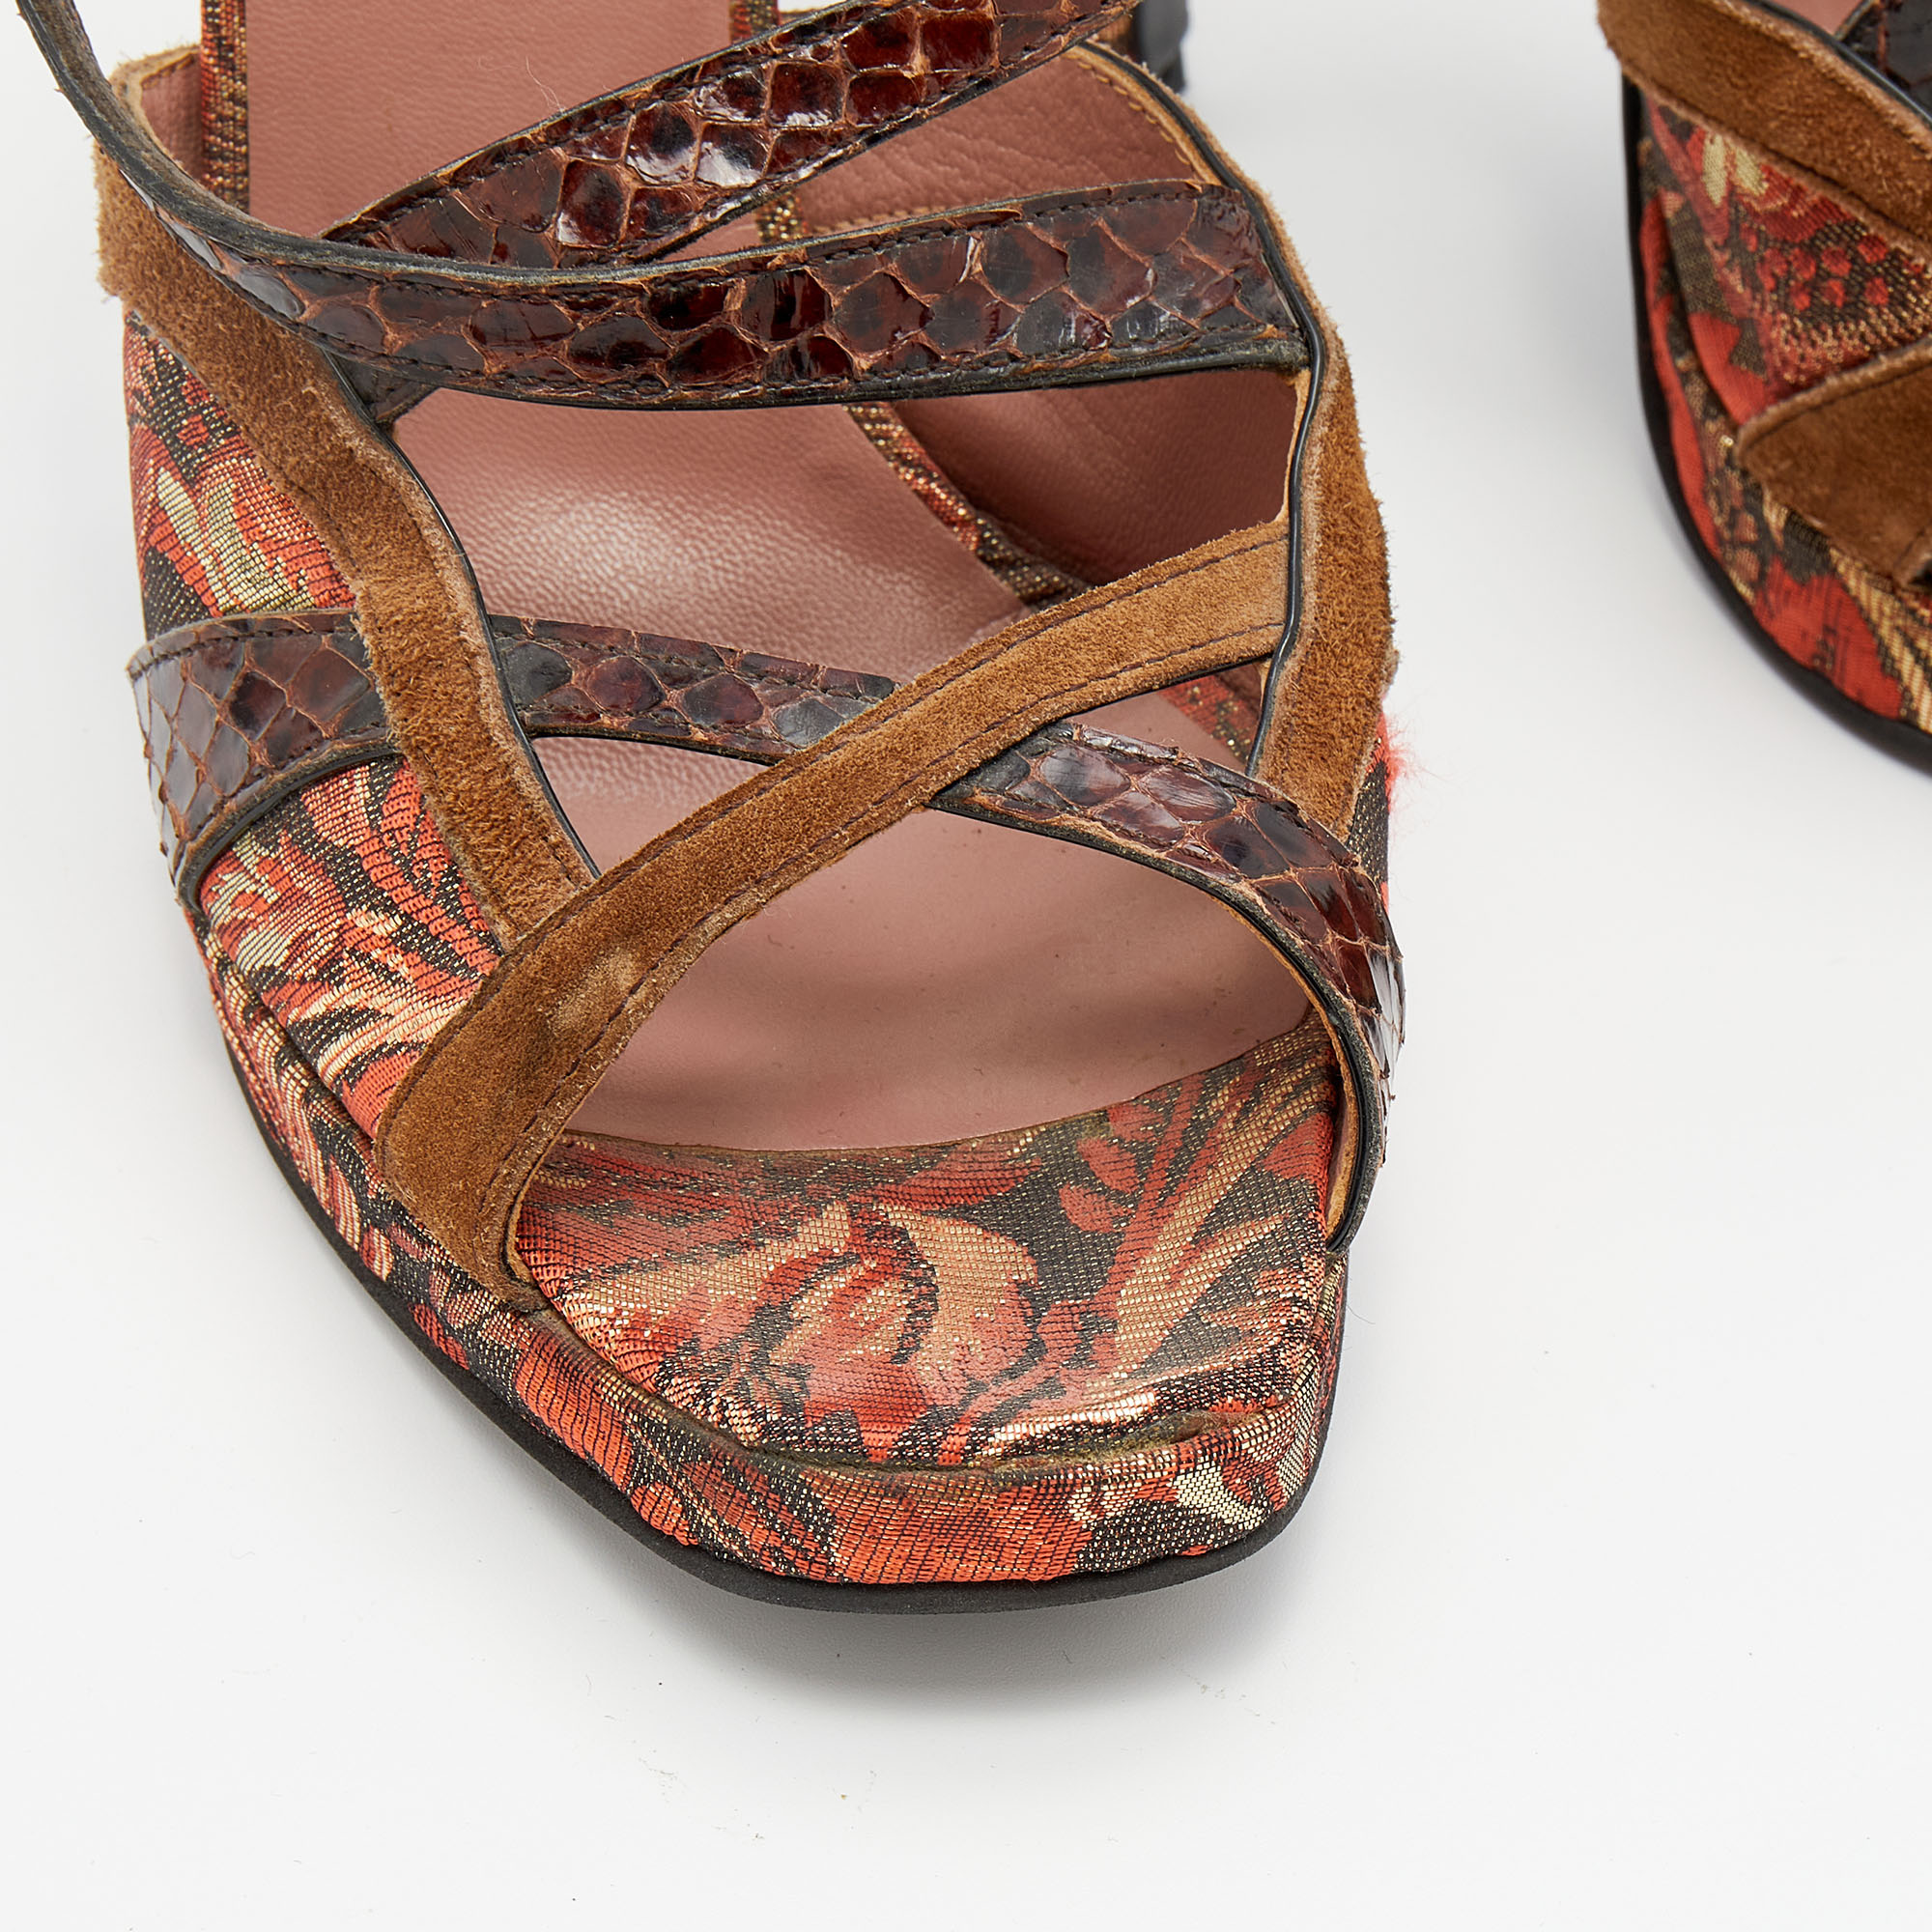 Miu Miu Multicolor Brocade And Python Strappy Slingback Sandals Size 39.5